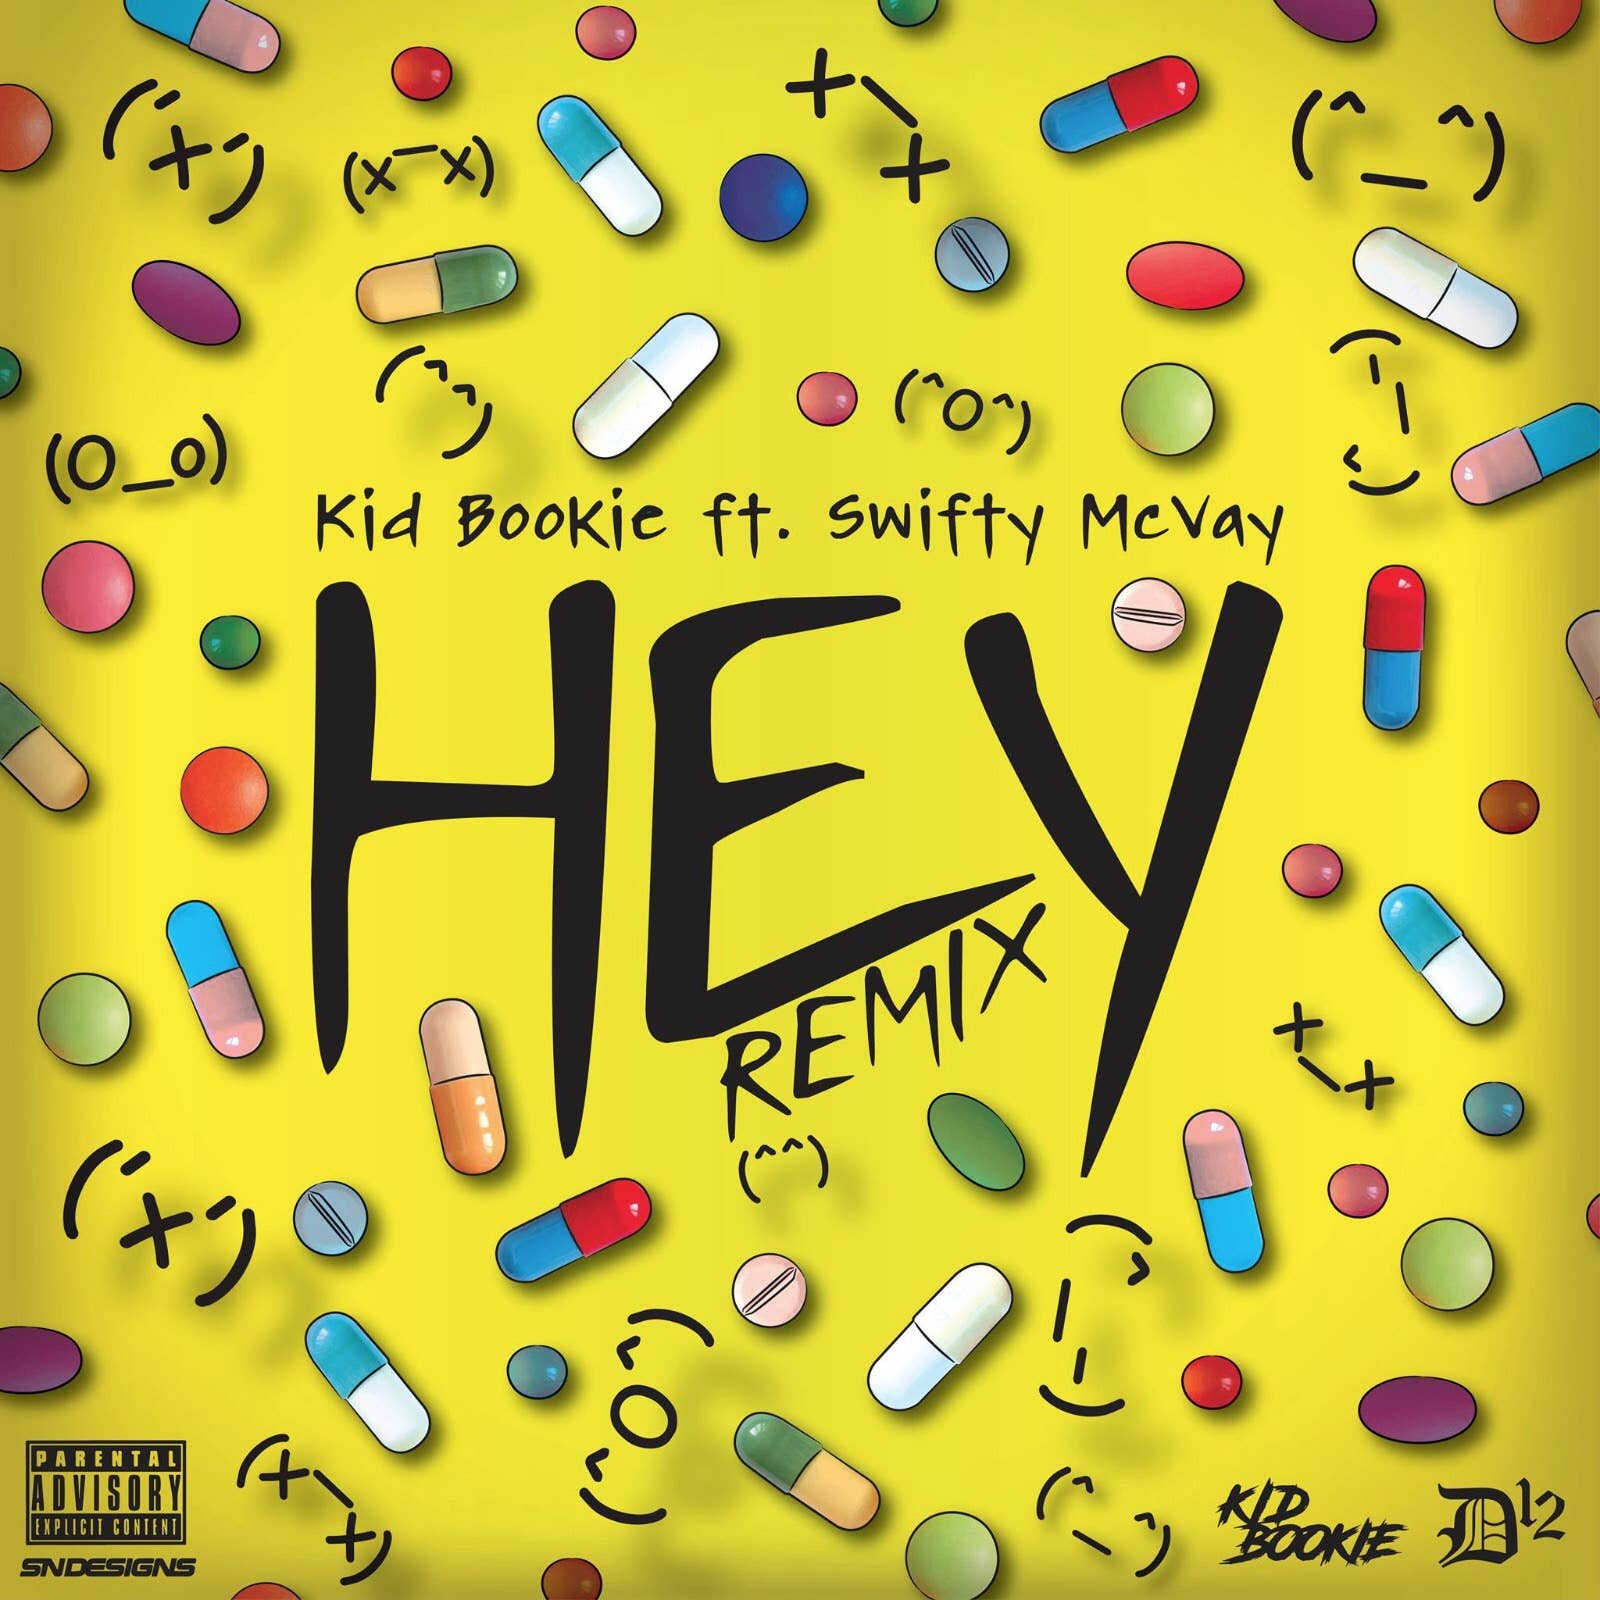 Kid Bookie "Hey" Remix